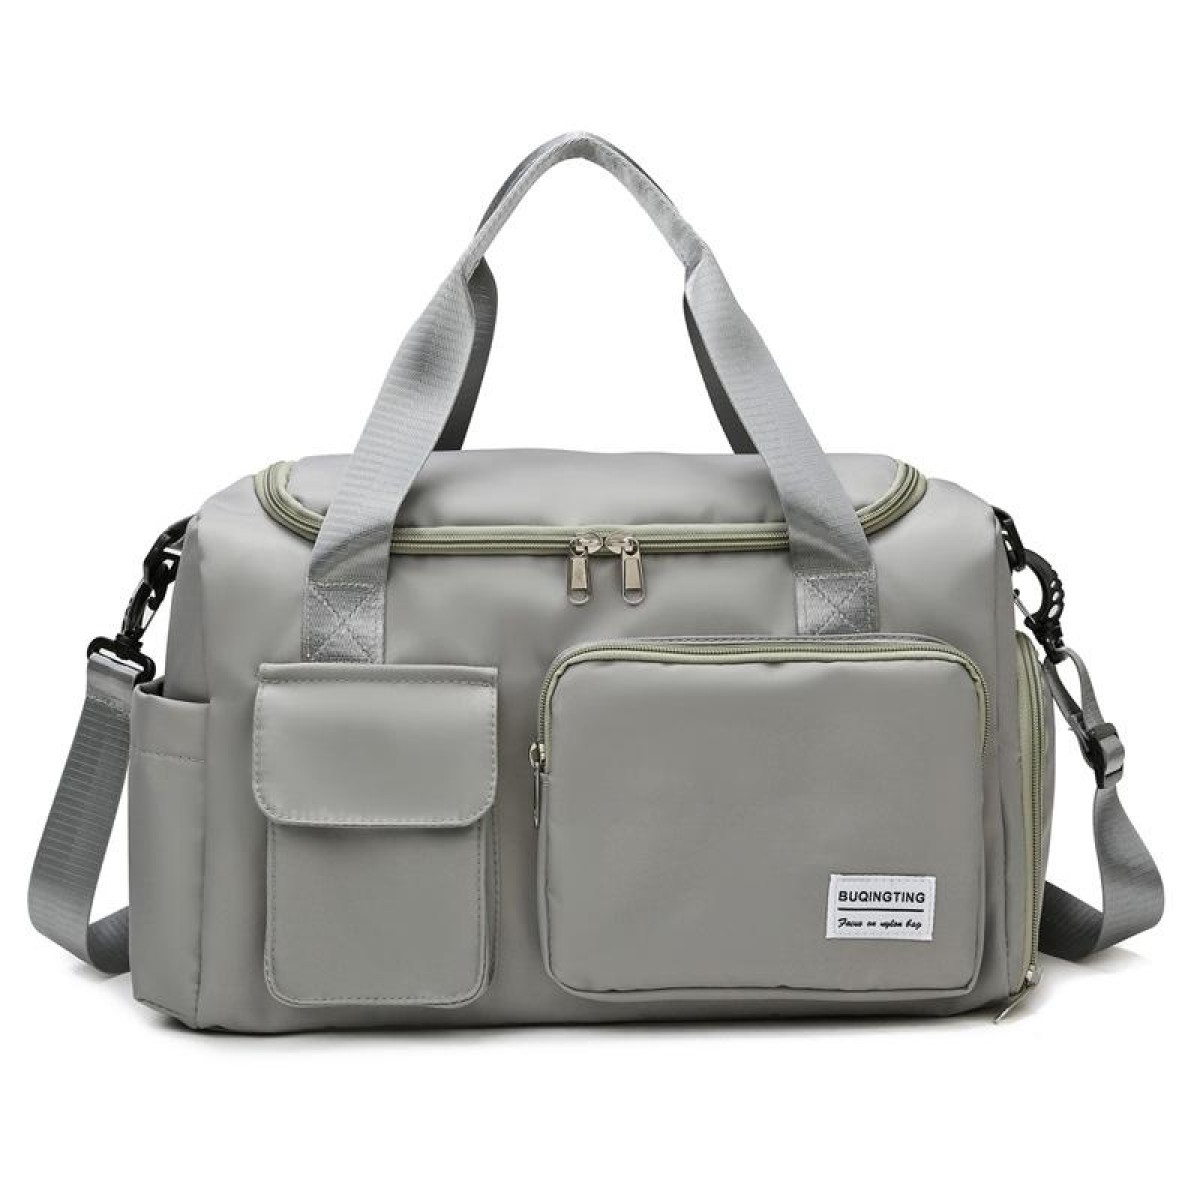 B-X336 Large Capacity Waterproof Travel Gym Bag Luggage Bag, Size: L(Light Grey)